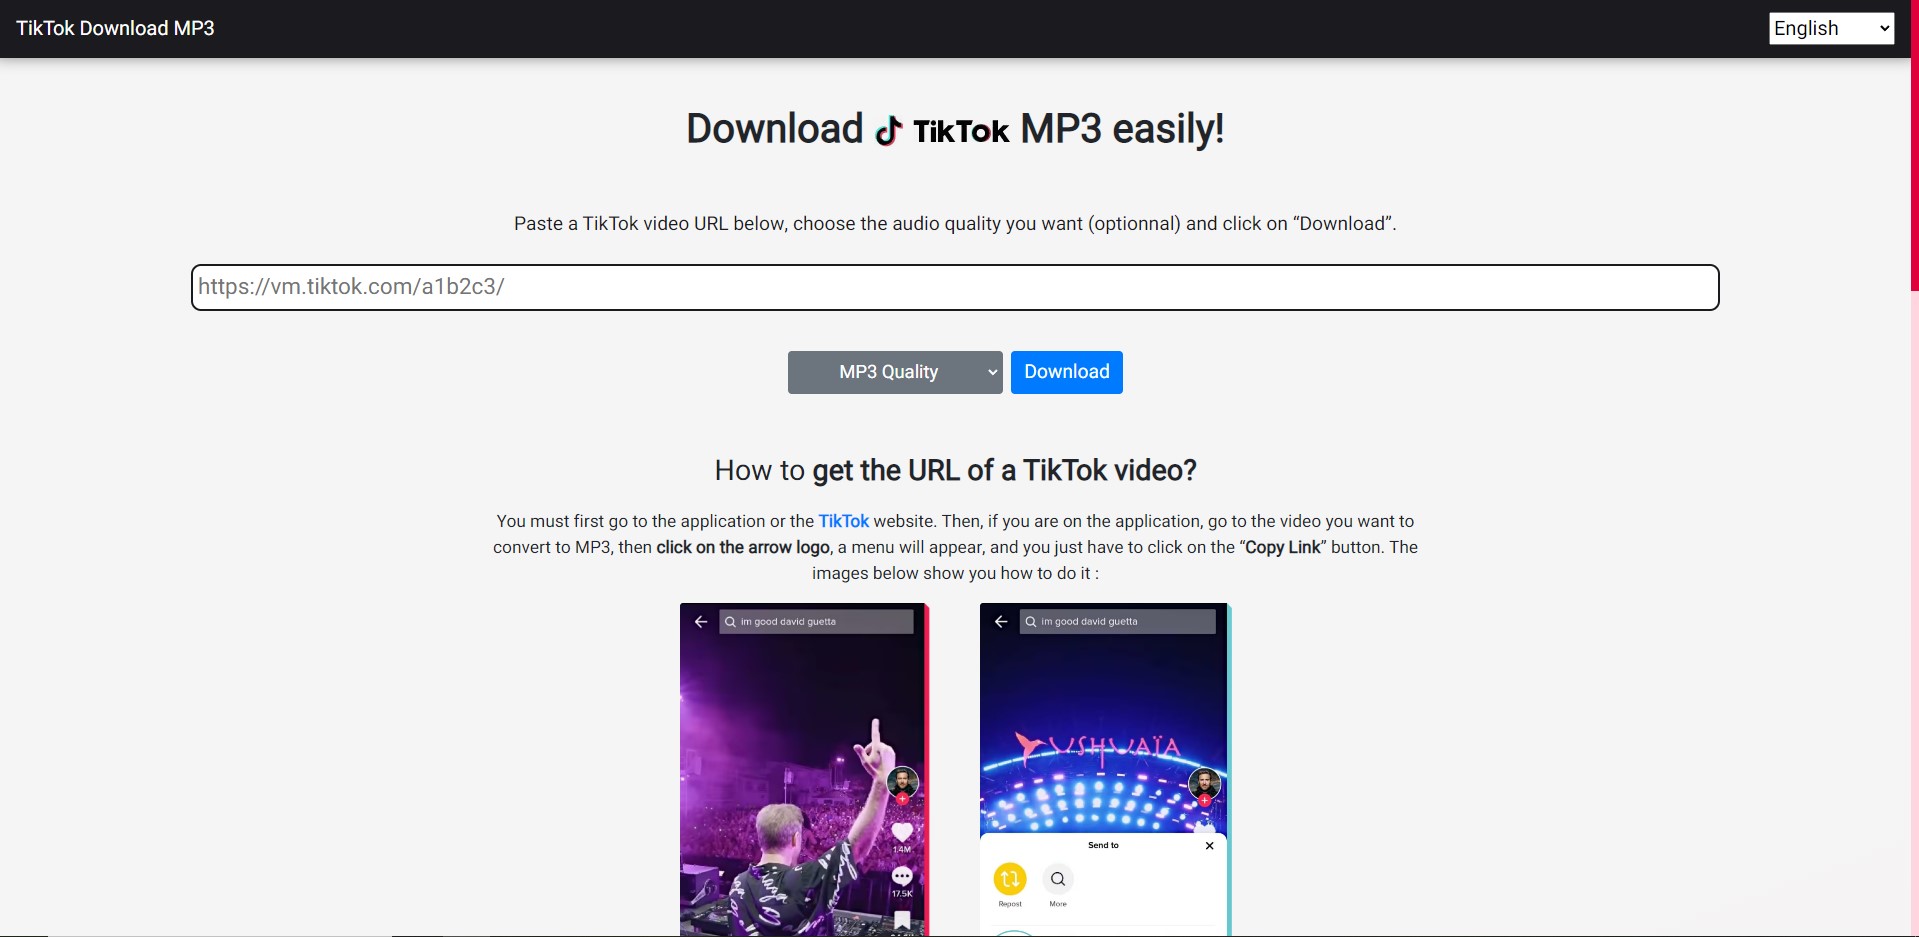 TikVid: TikTok MP3 Downloader - Download TikTok MP3, High Quality,  Unlimited and Fast.